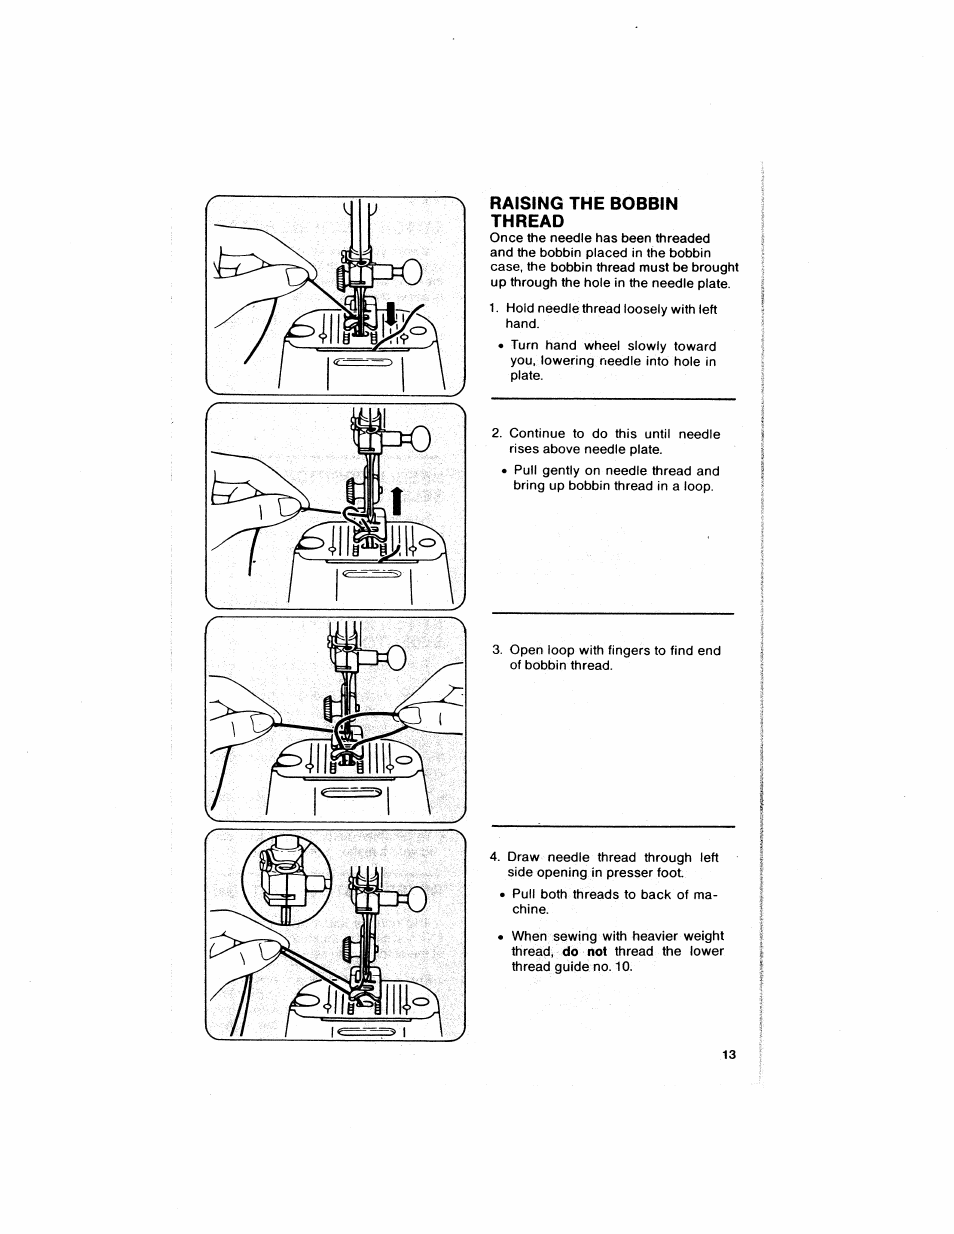 Raising the bobbin thread, Raisingtho^bobbin thread | SINGER 6211 User Manual | Page 15 / 36